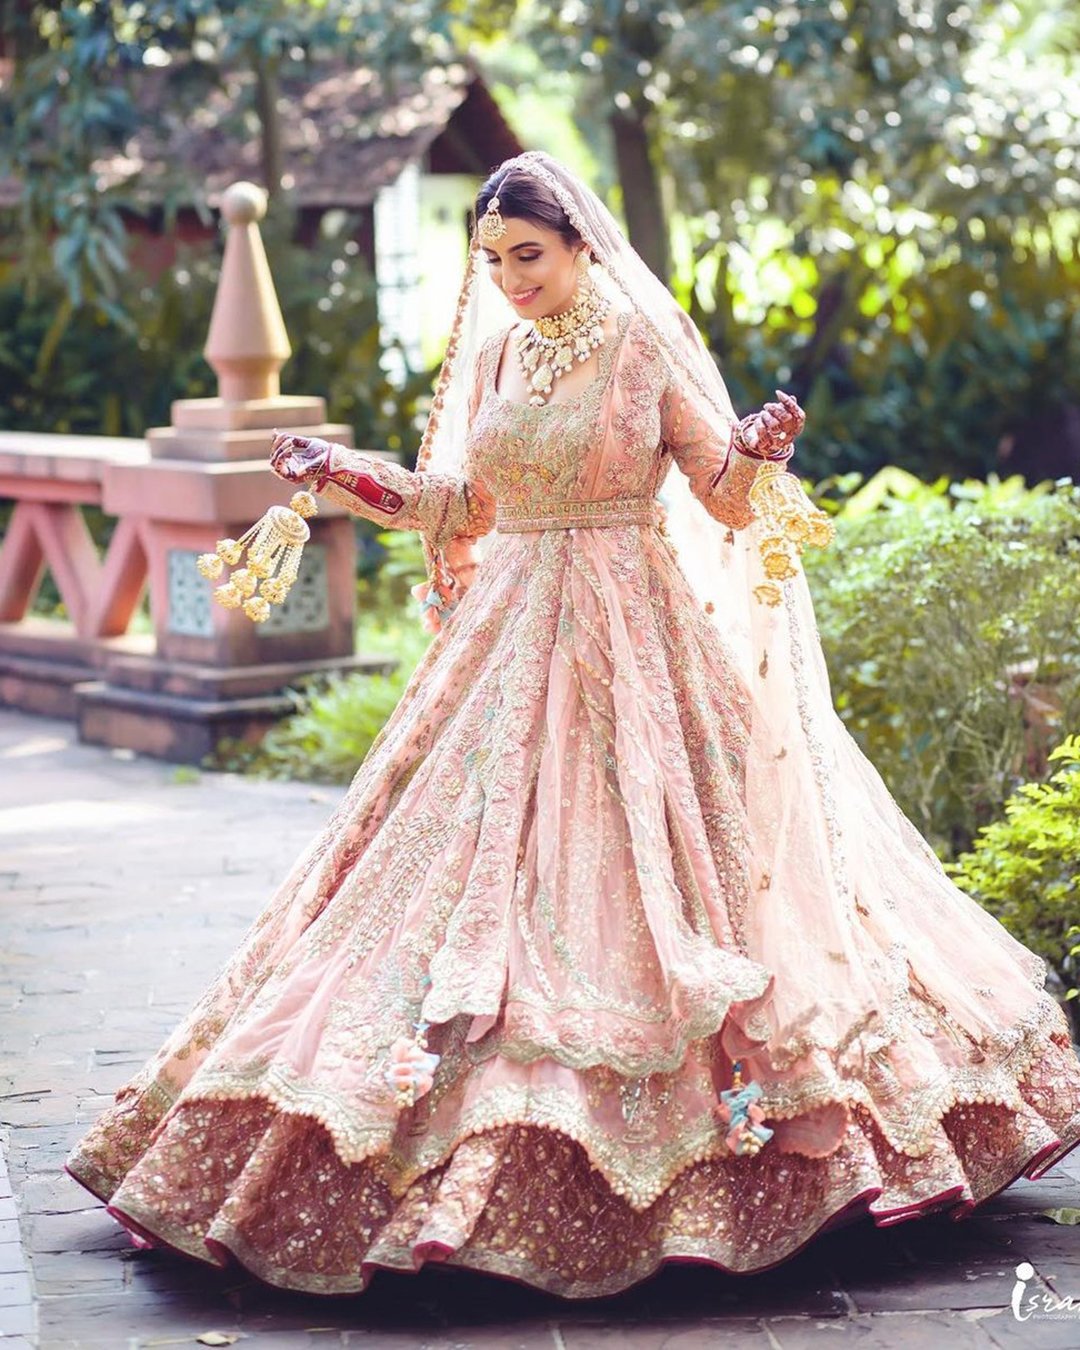 Hindu Wedding Dresses Top Review hindu wedding dresses - Find the ...